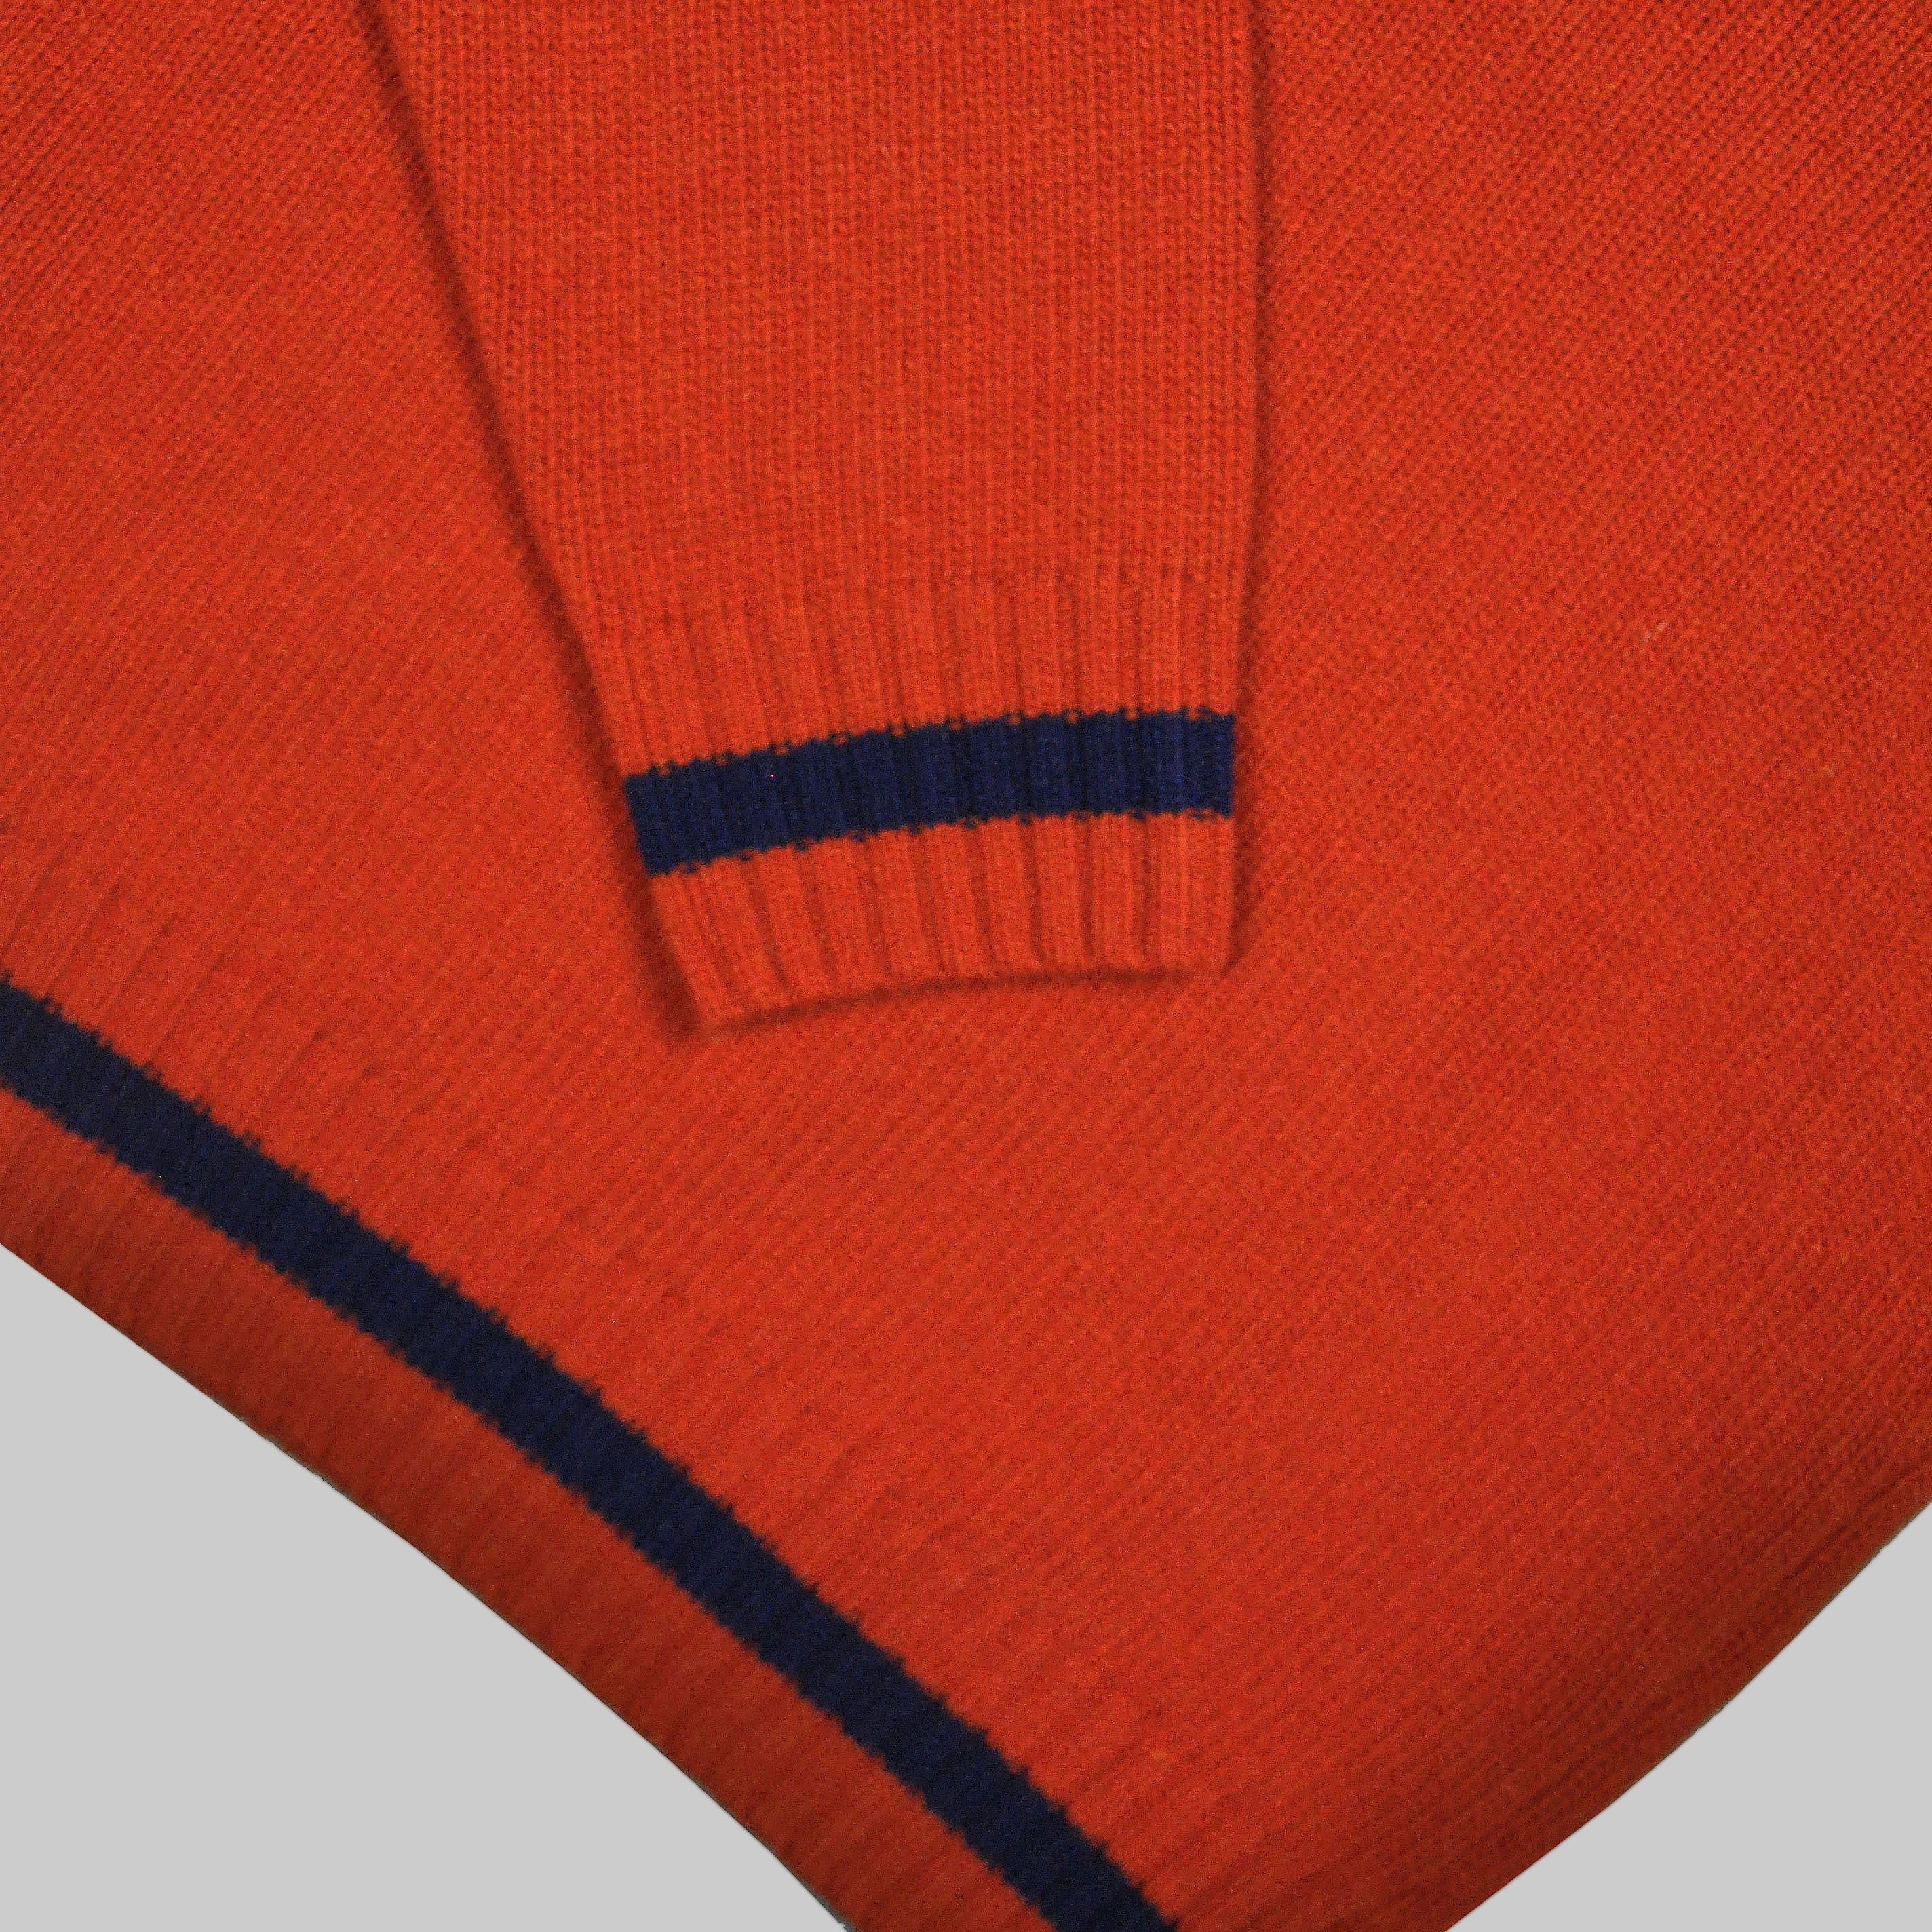 Merino Wool V-Neck Cricket Style Jumper in Orange with Blue Trim